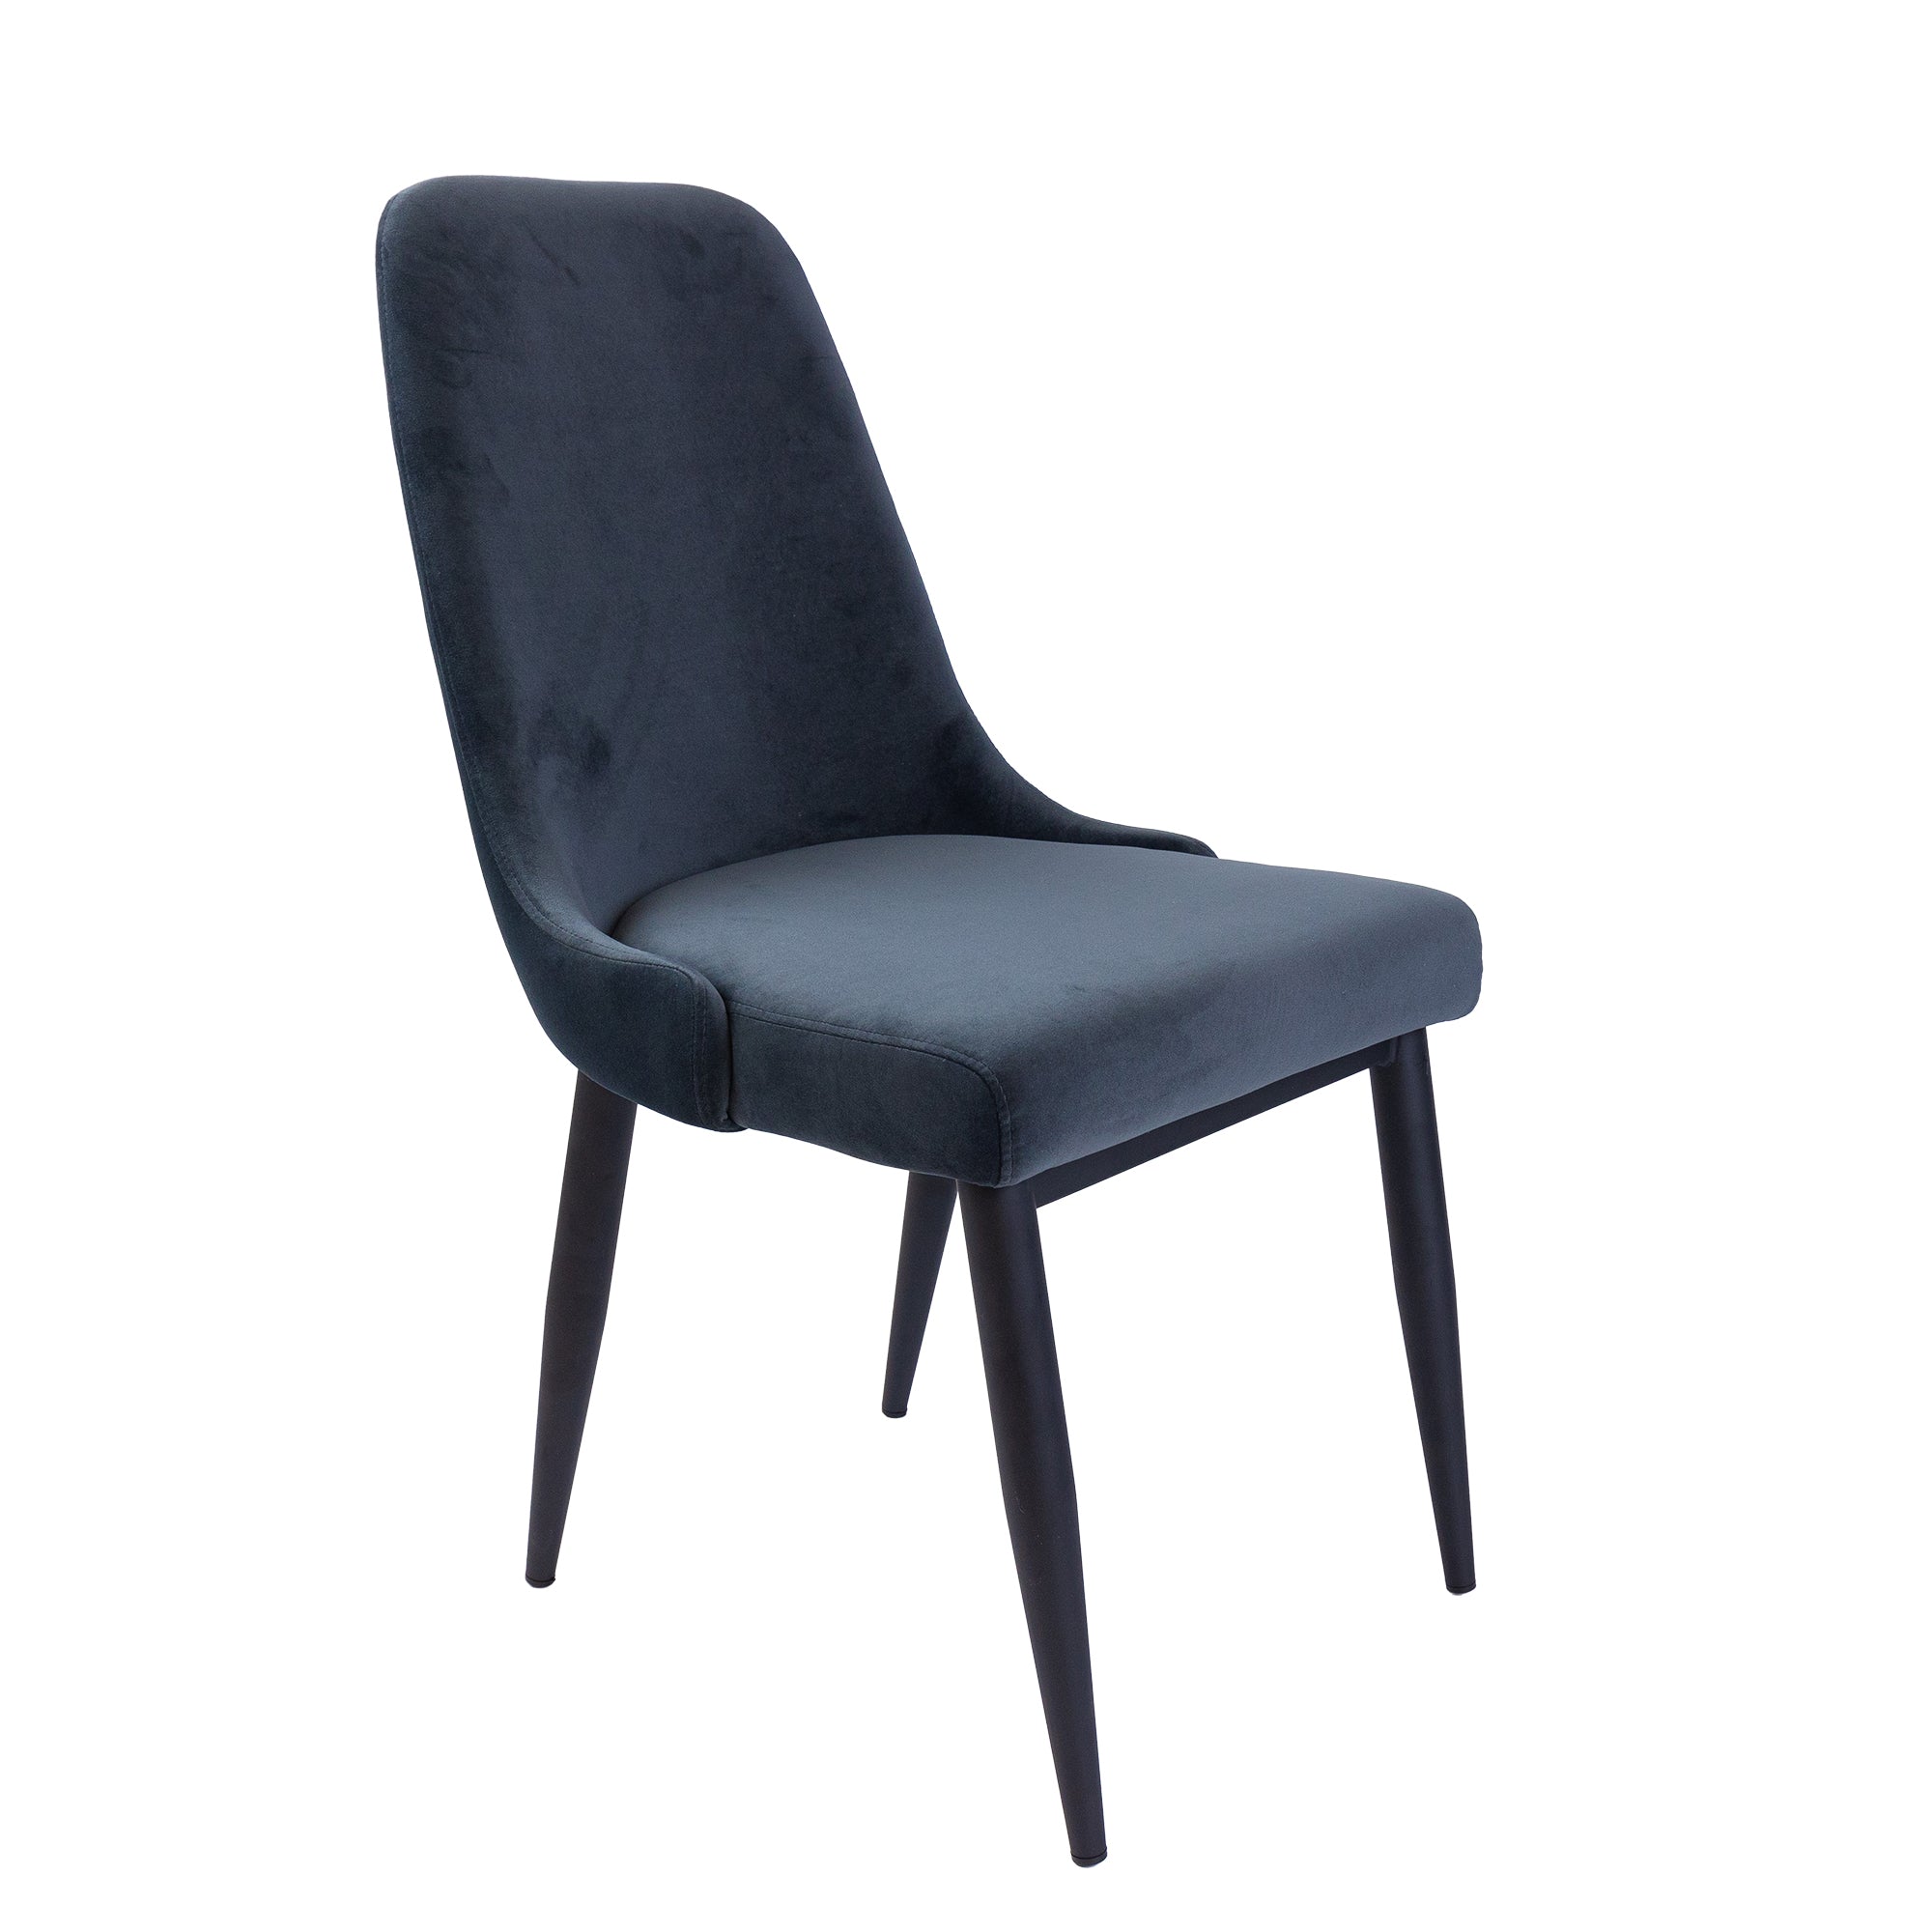 6pc Velvet Upholstered Dining Chairs, Metal Frame - Charcoal